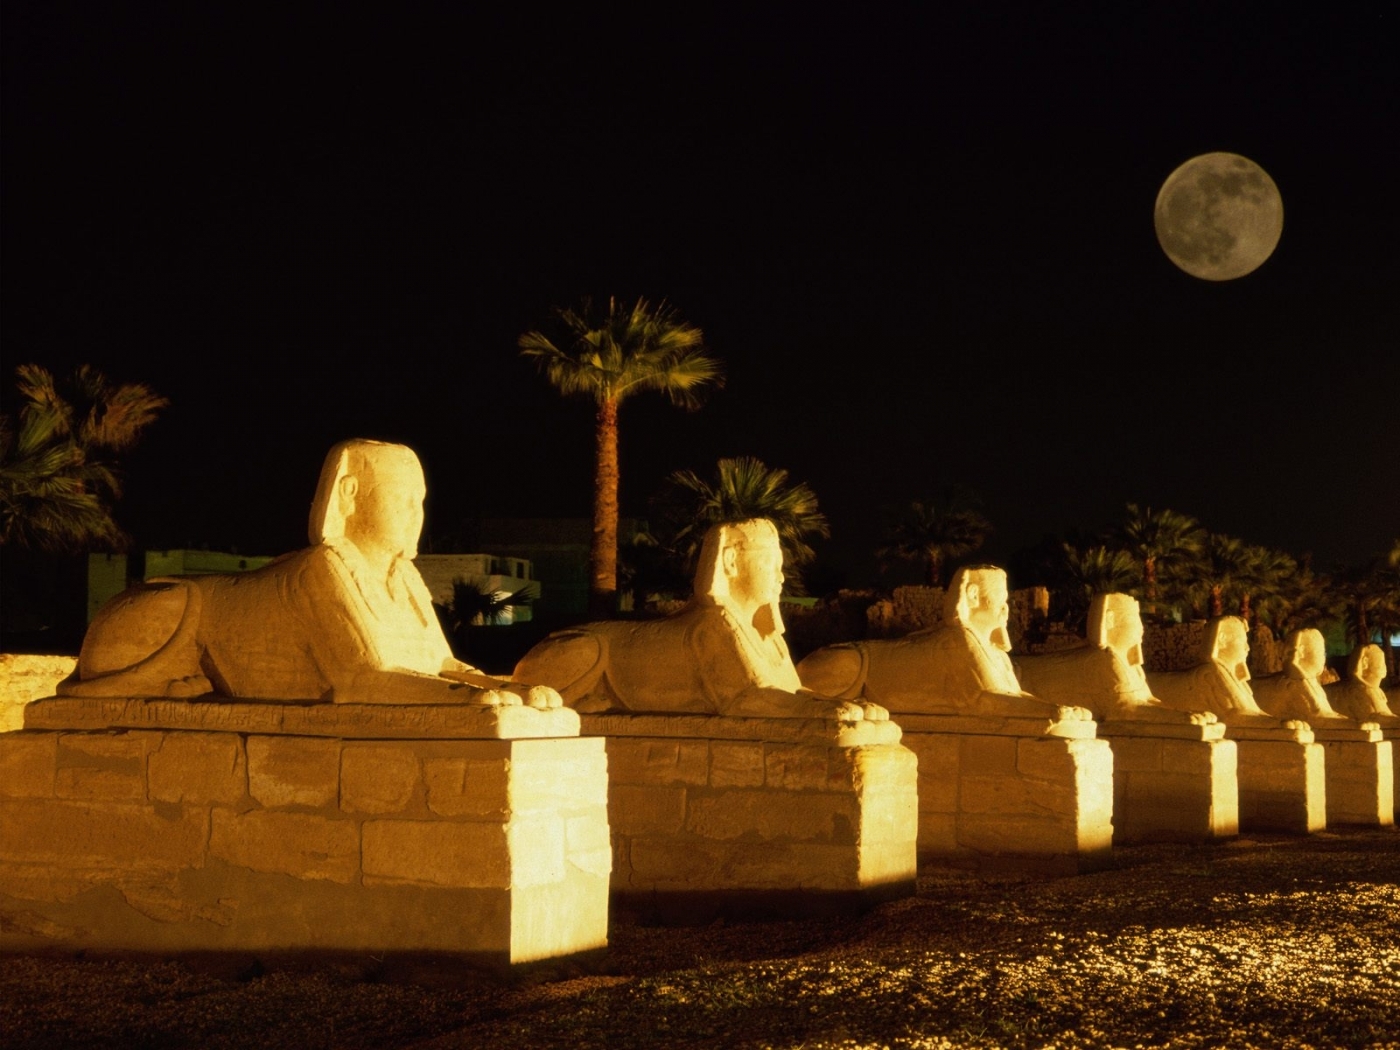 egypt, landscape, night, sphinx, black